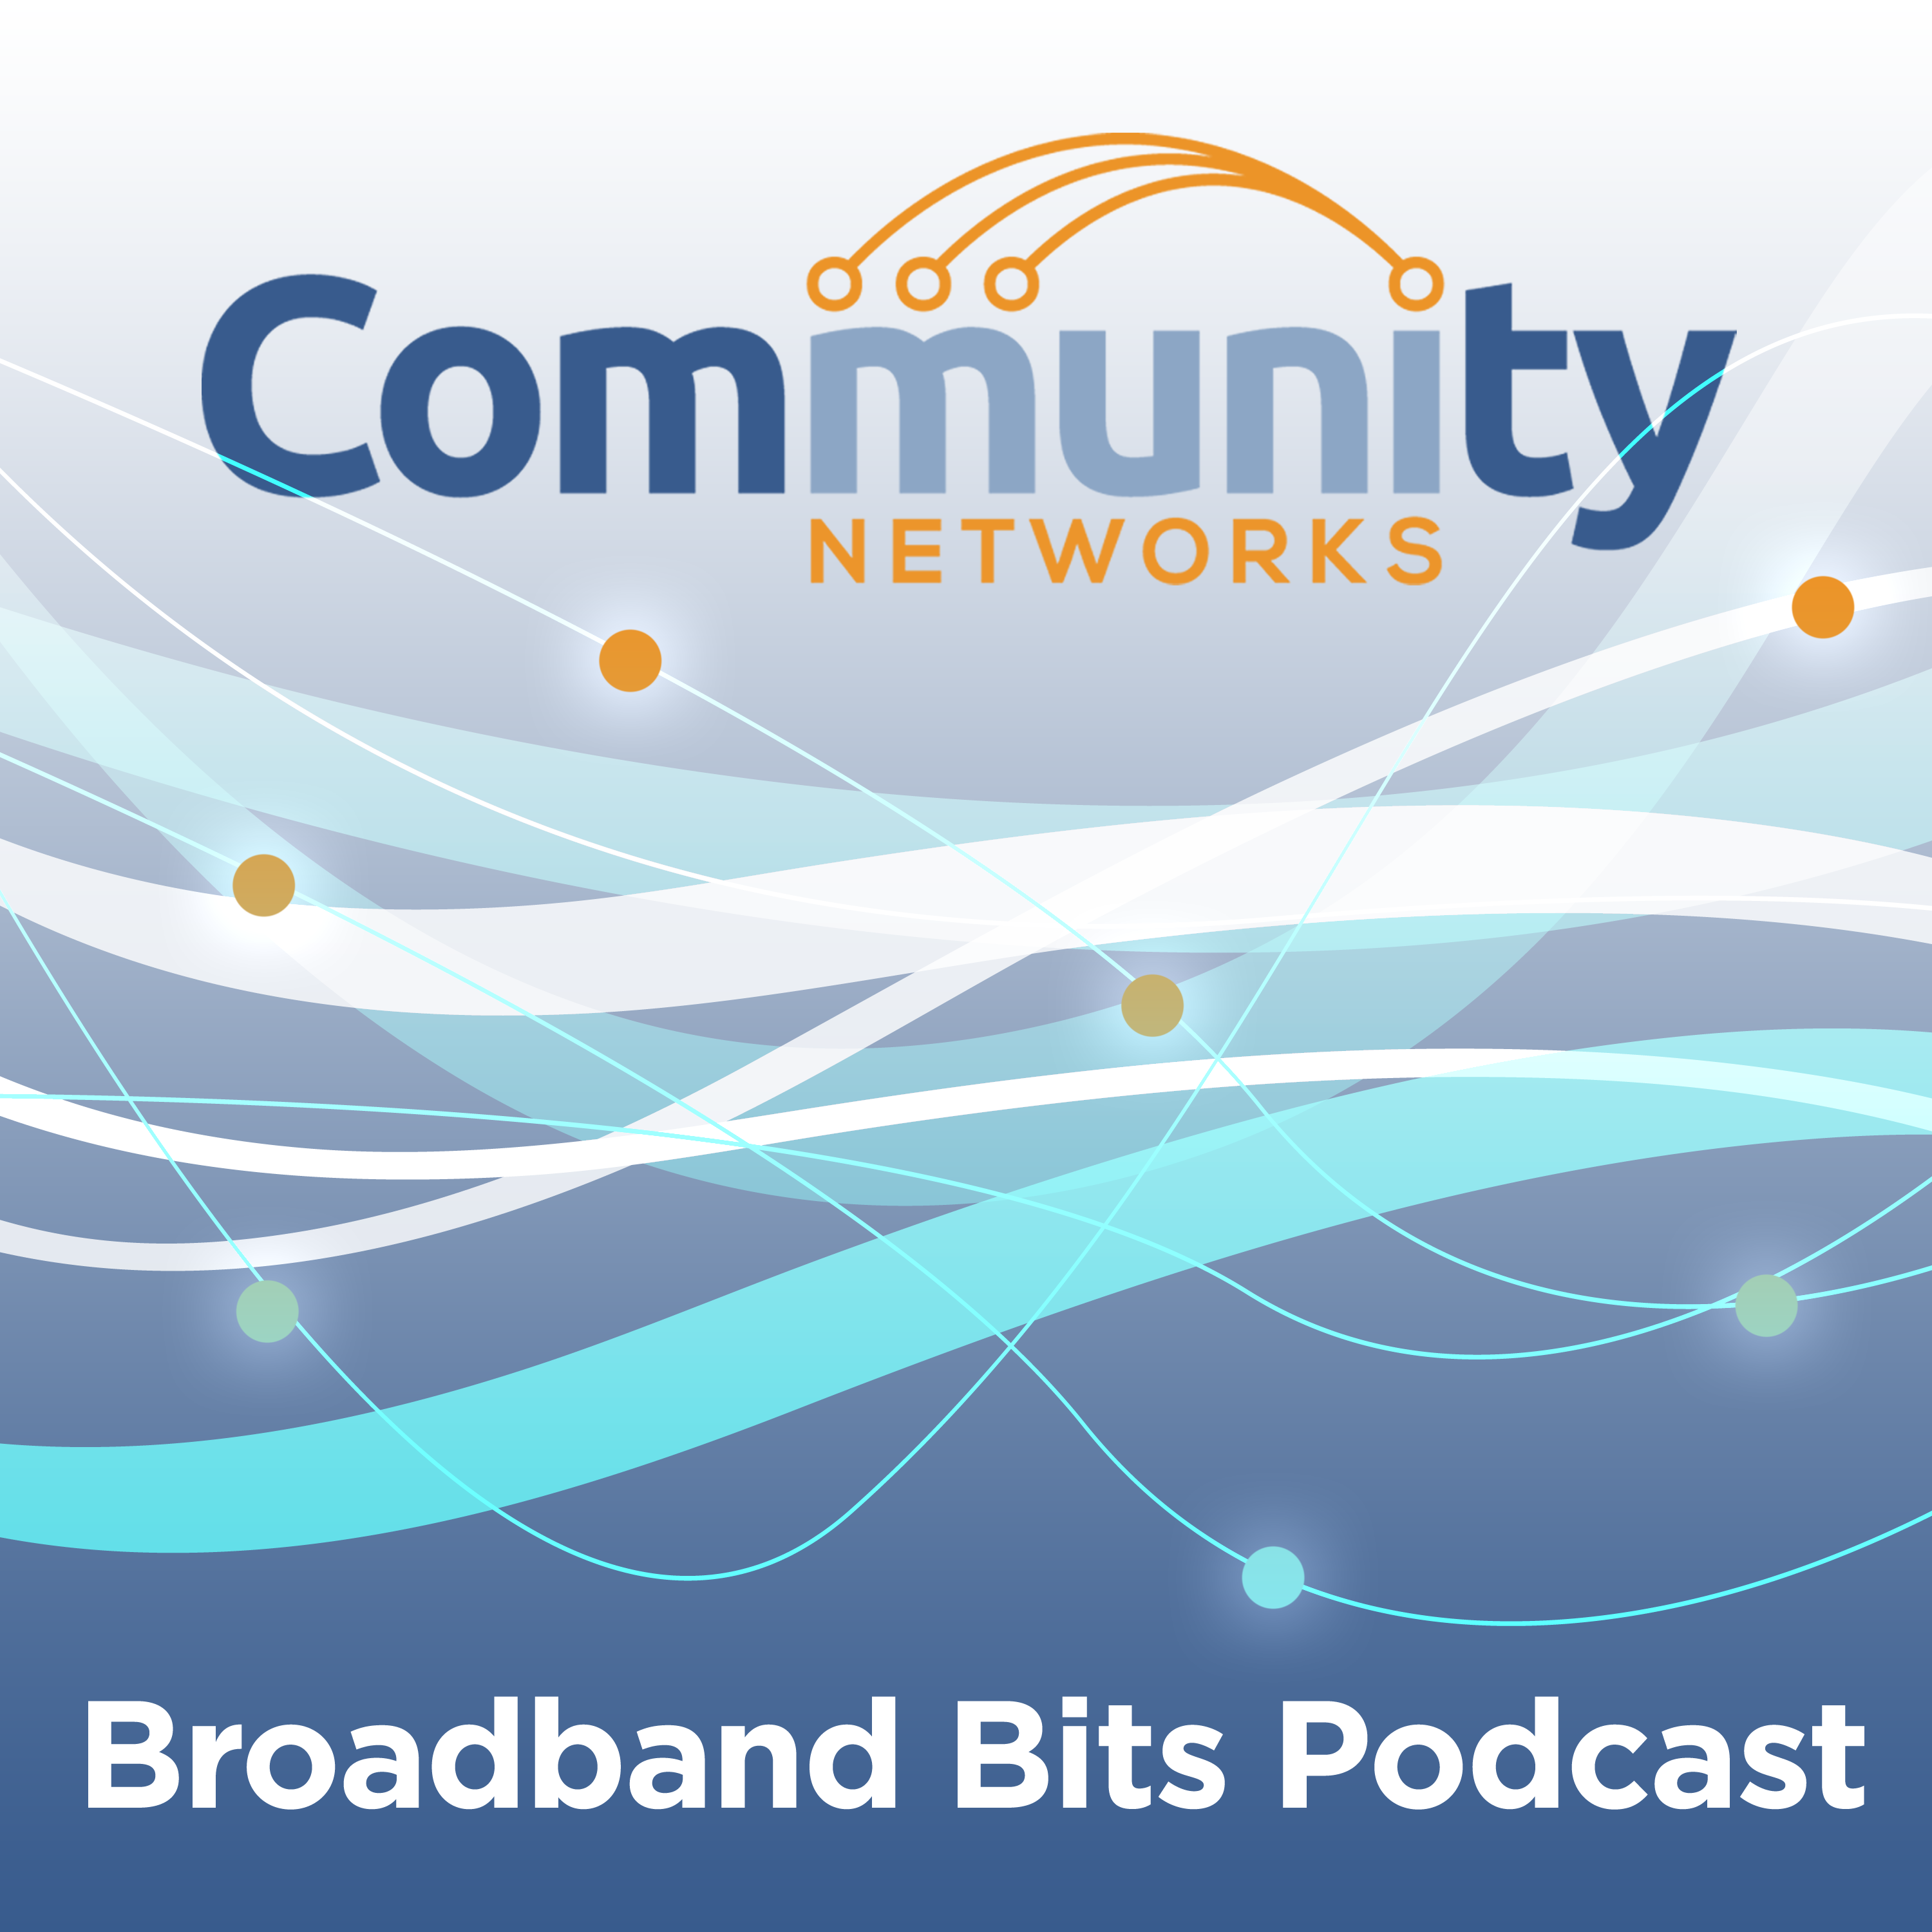 Community Broadband Bits